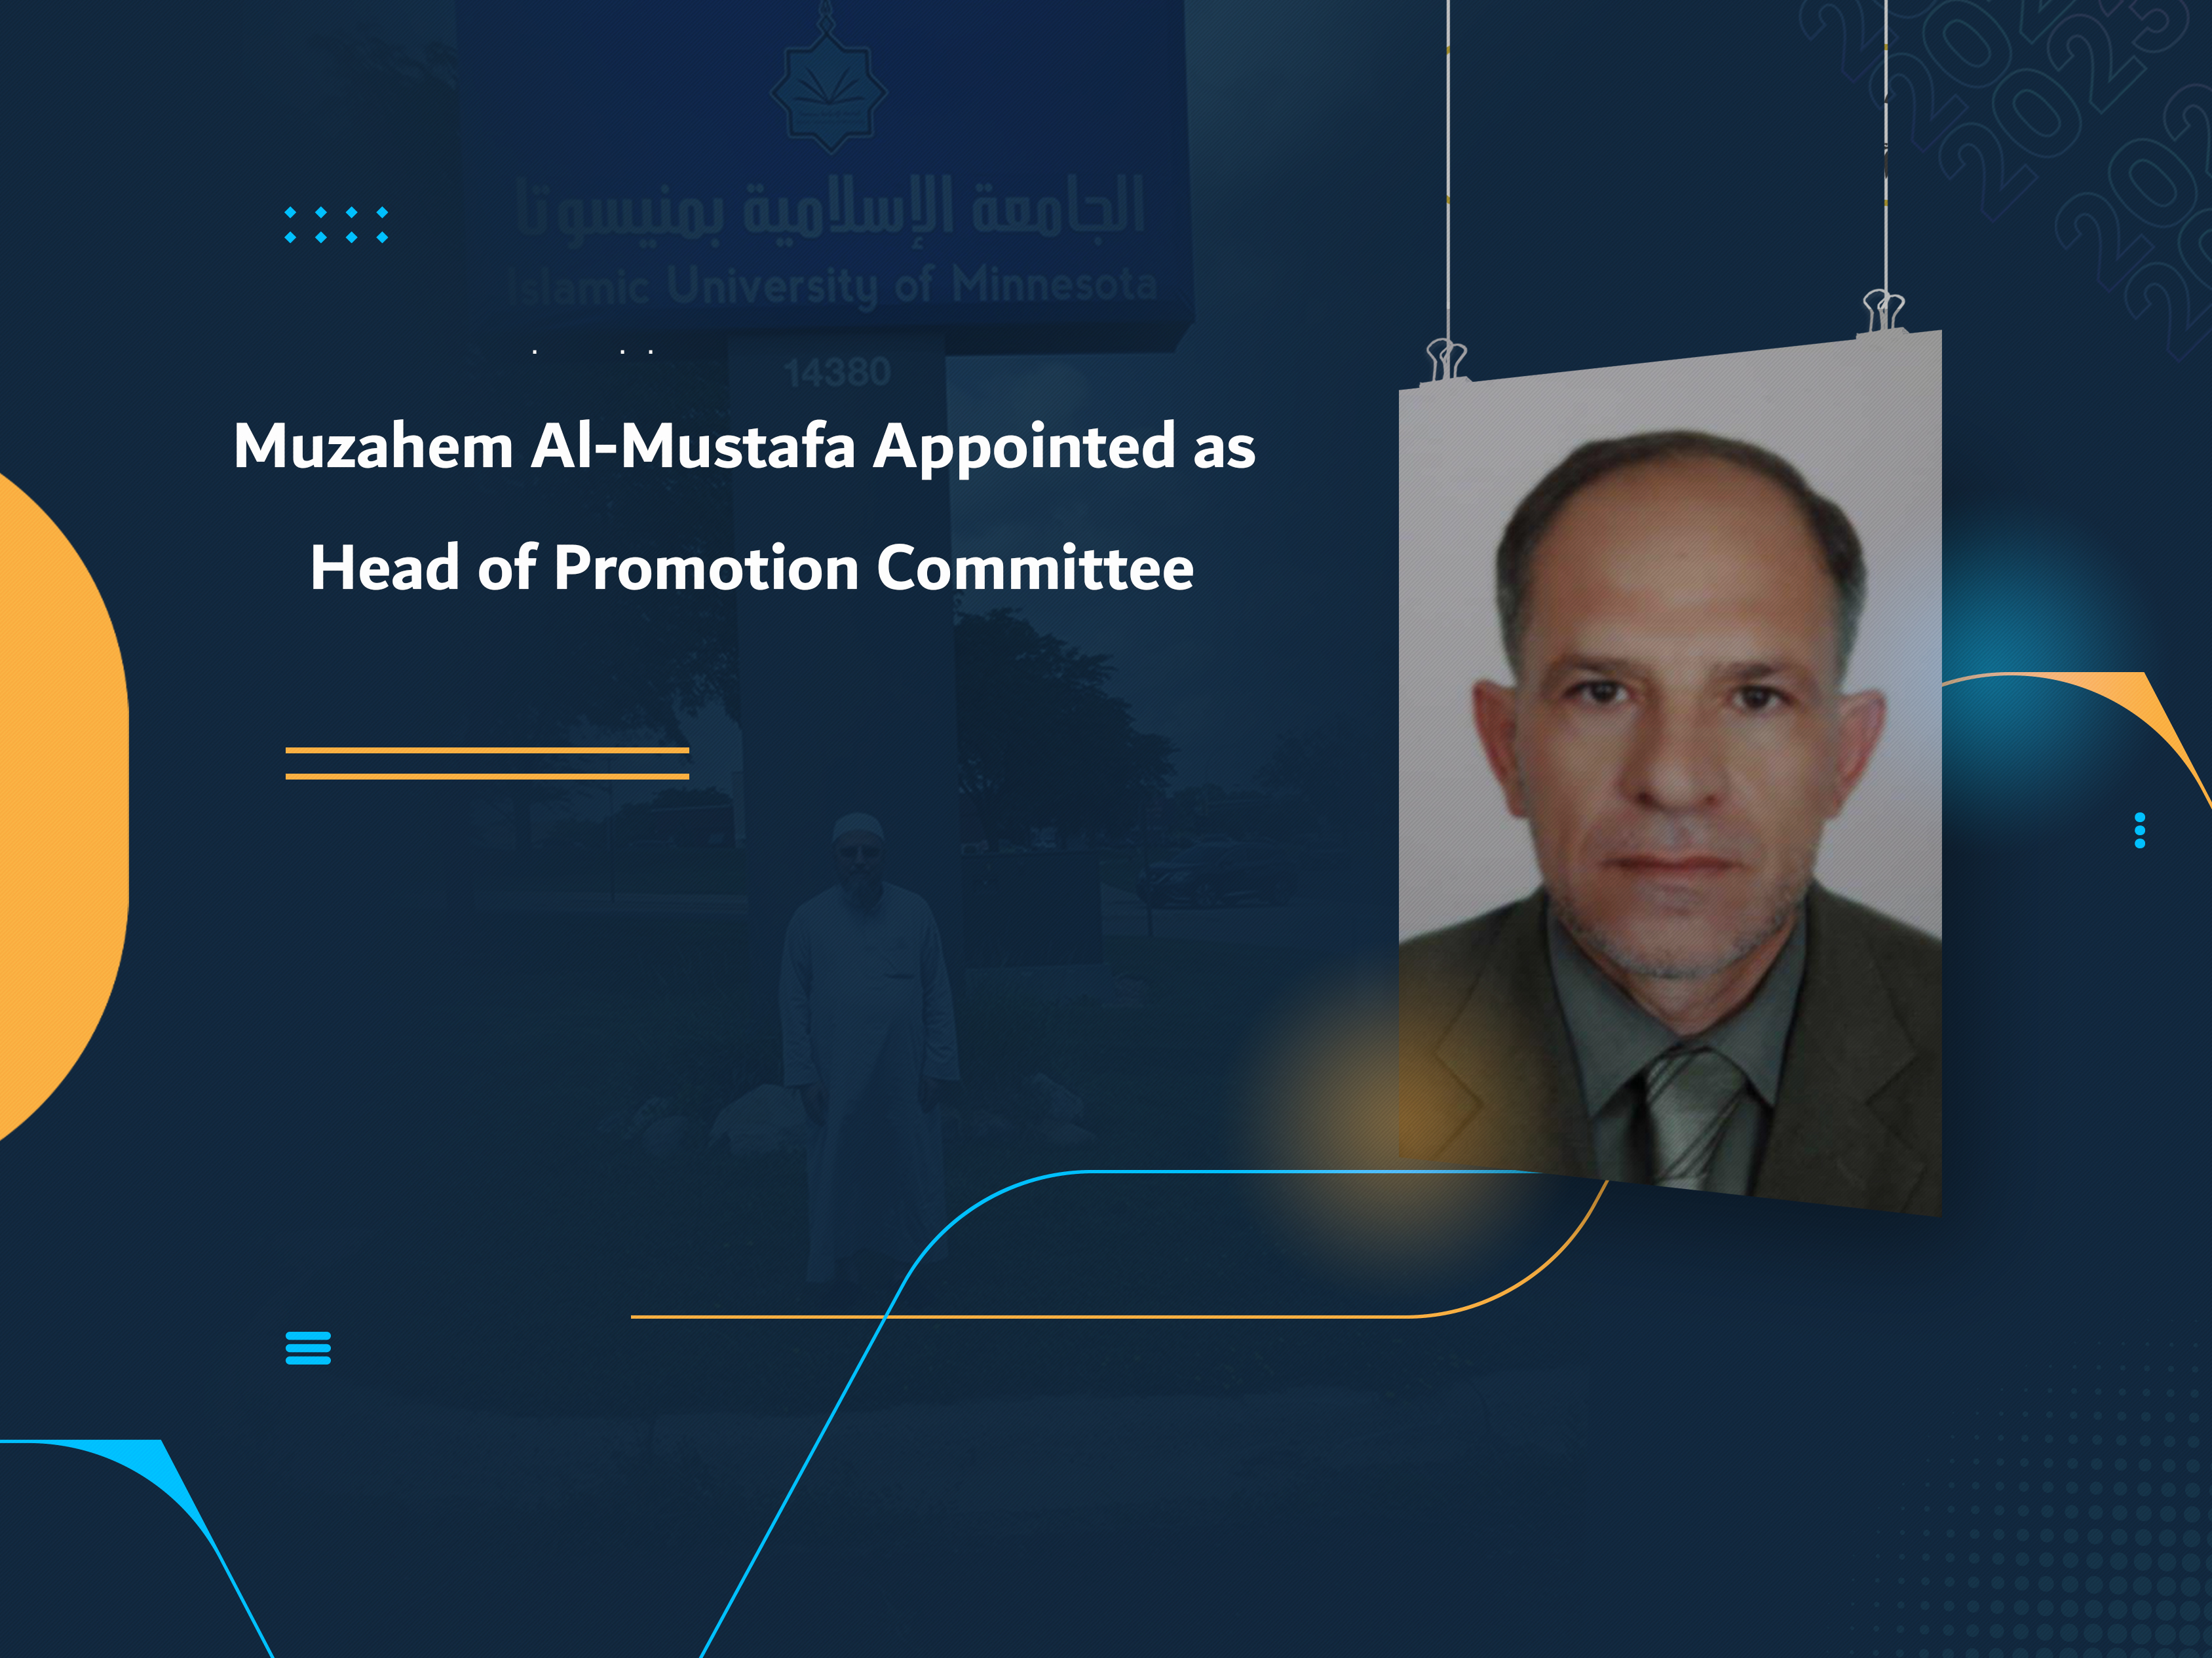 Muzahem Al-Mustafa Appointed as Head of Promotion Committee